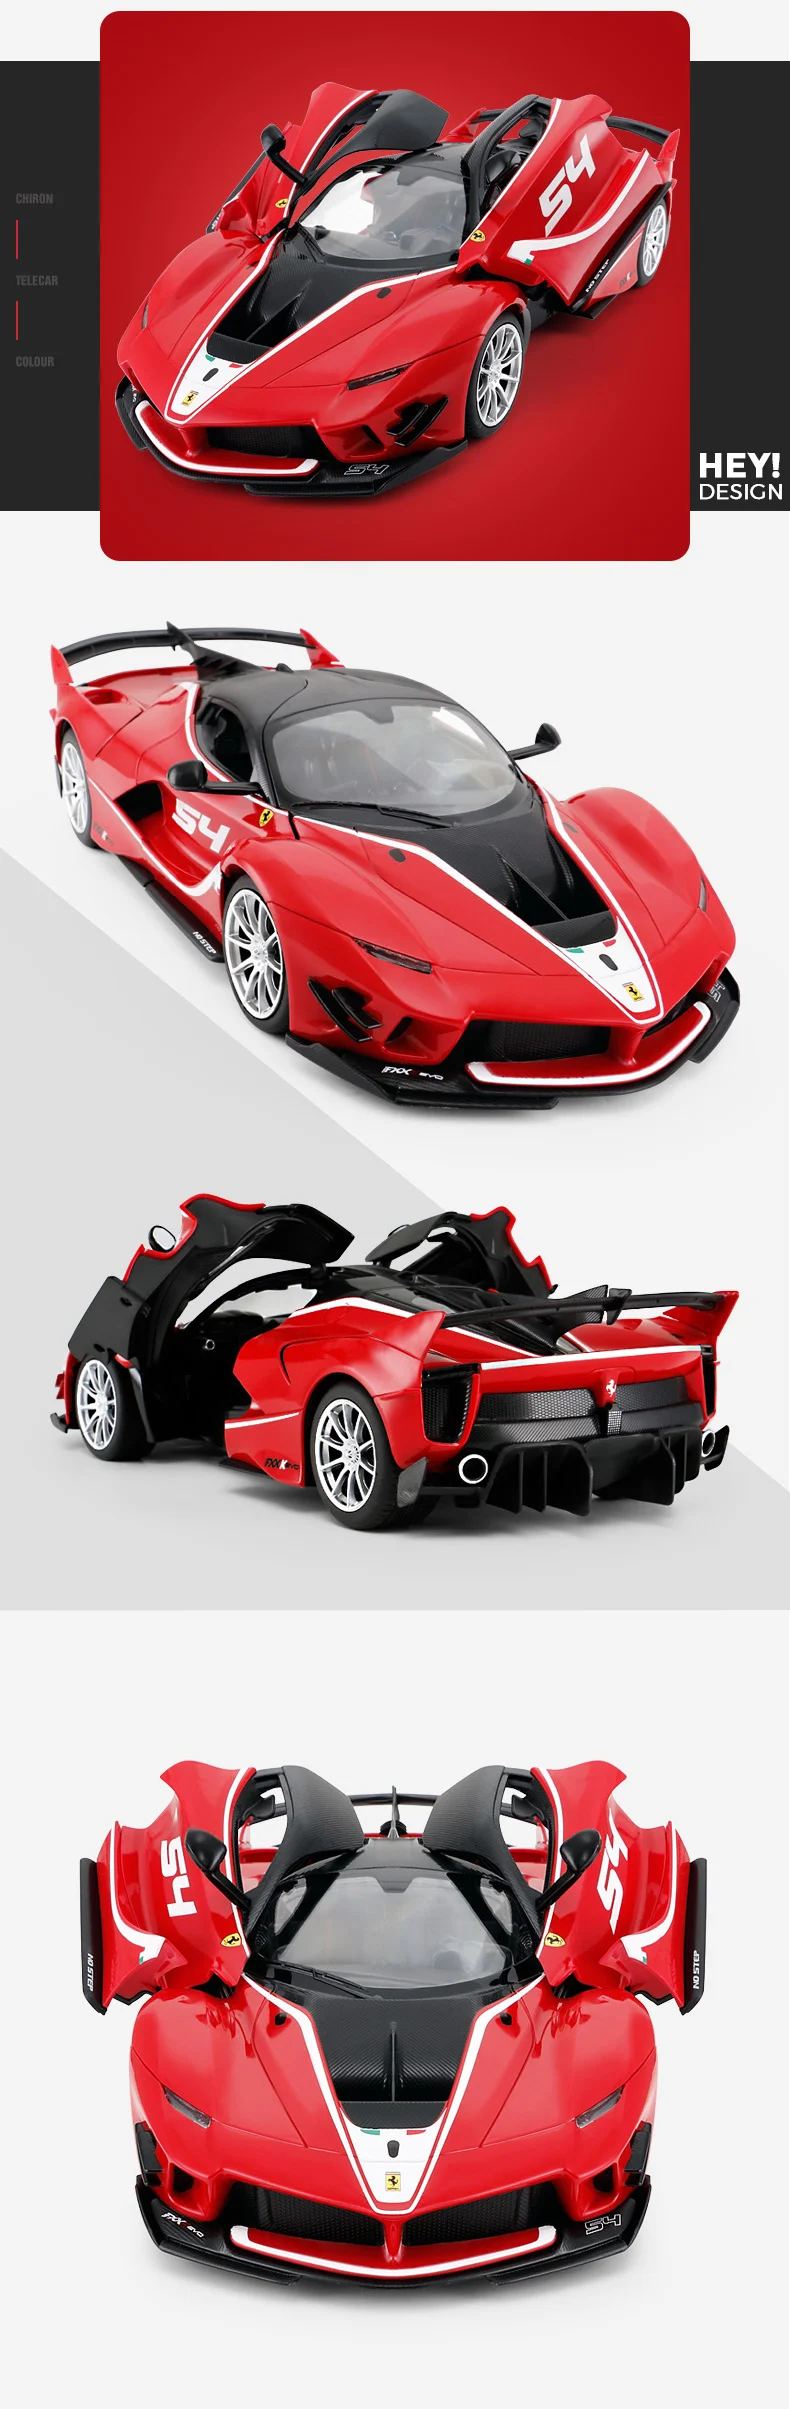 RASTAR 1:14 scale electric vehicle Ferrari remote control toy rc car for kids